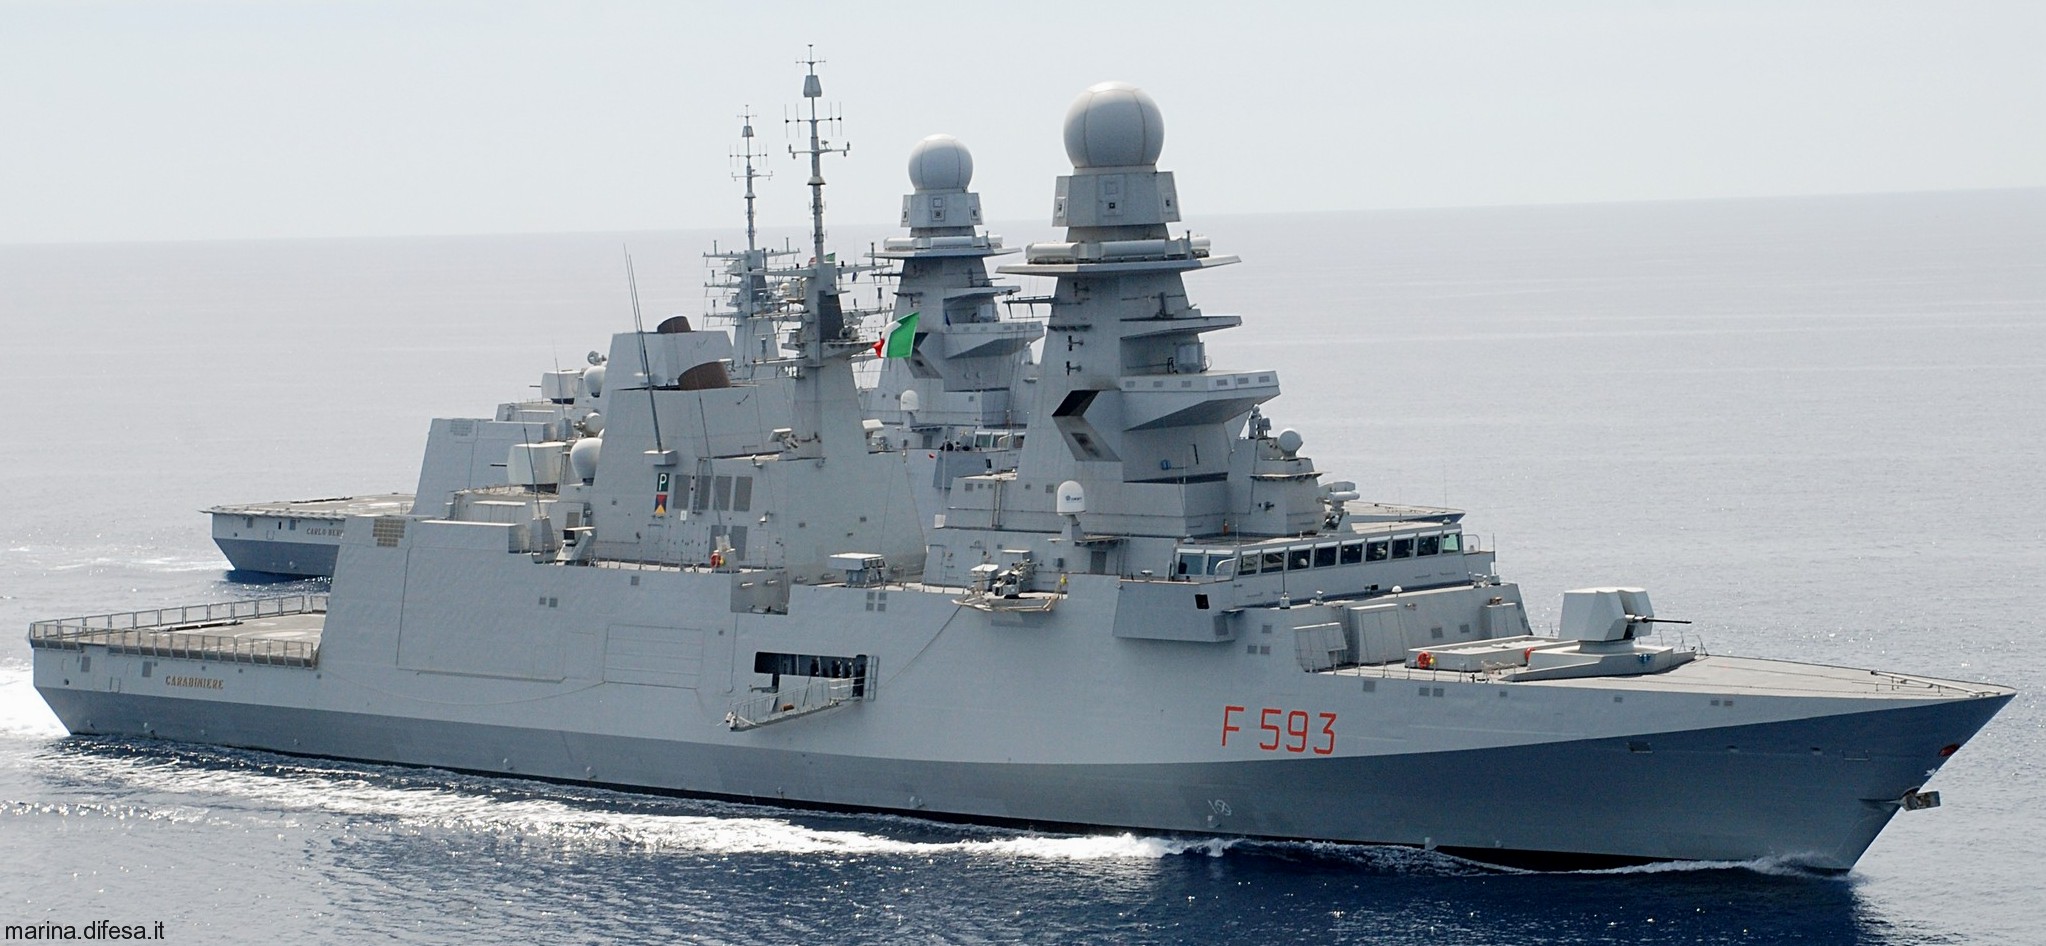 f-593 carabiniere its nave bergamini fremm class guided missile frigate italian navy marina militare 07